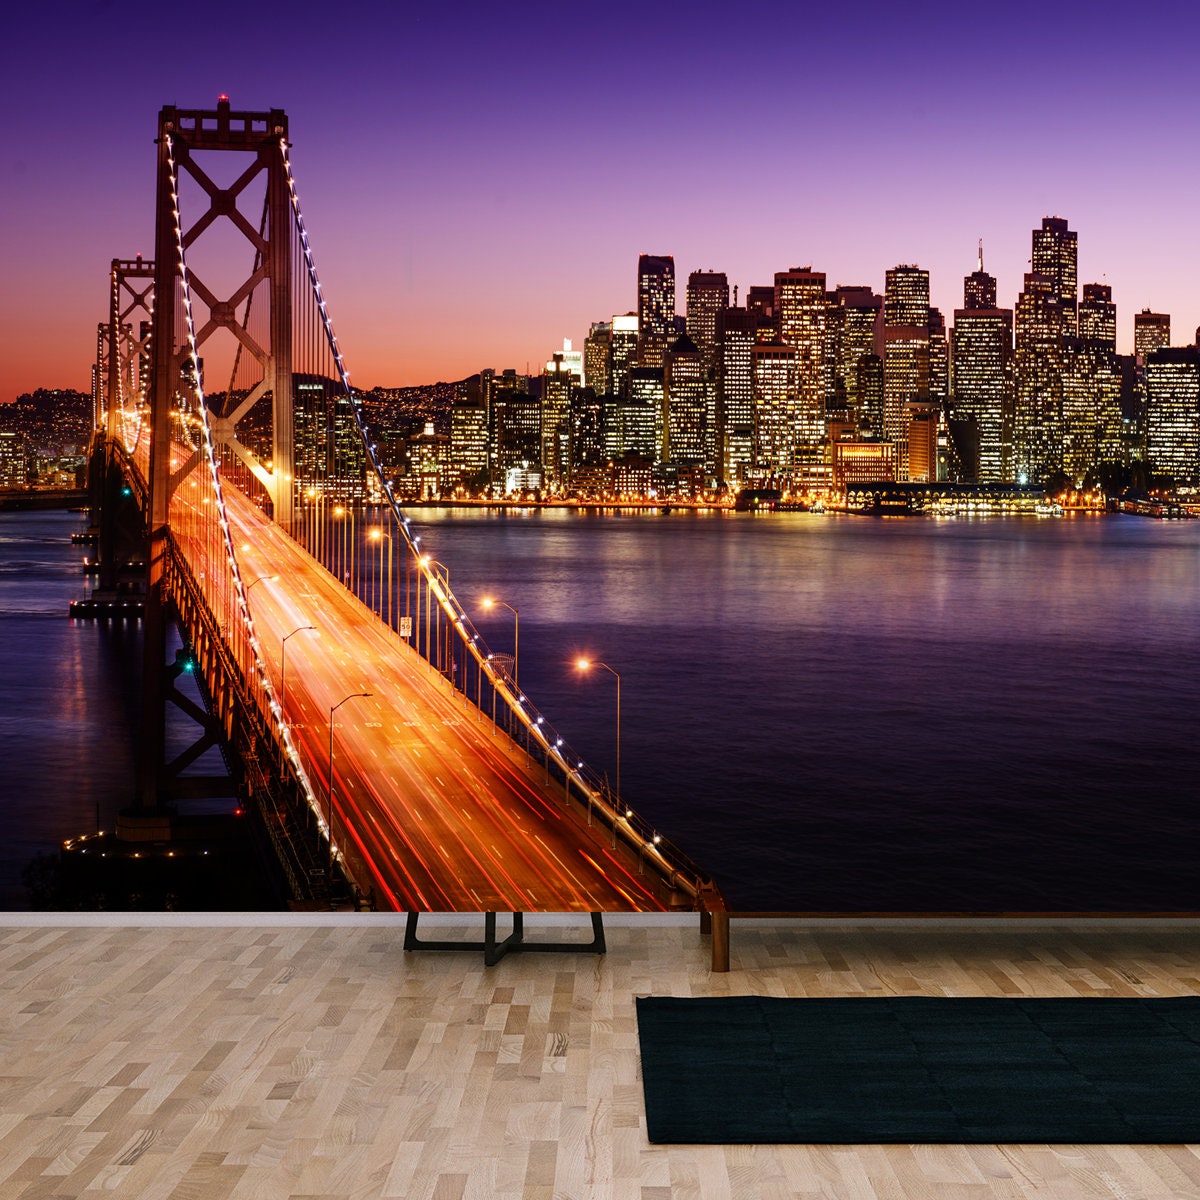 San Francisco Skyline and Bay Bridge at Sunset, California Wallpaper Living Room Mural